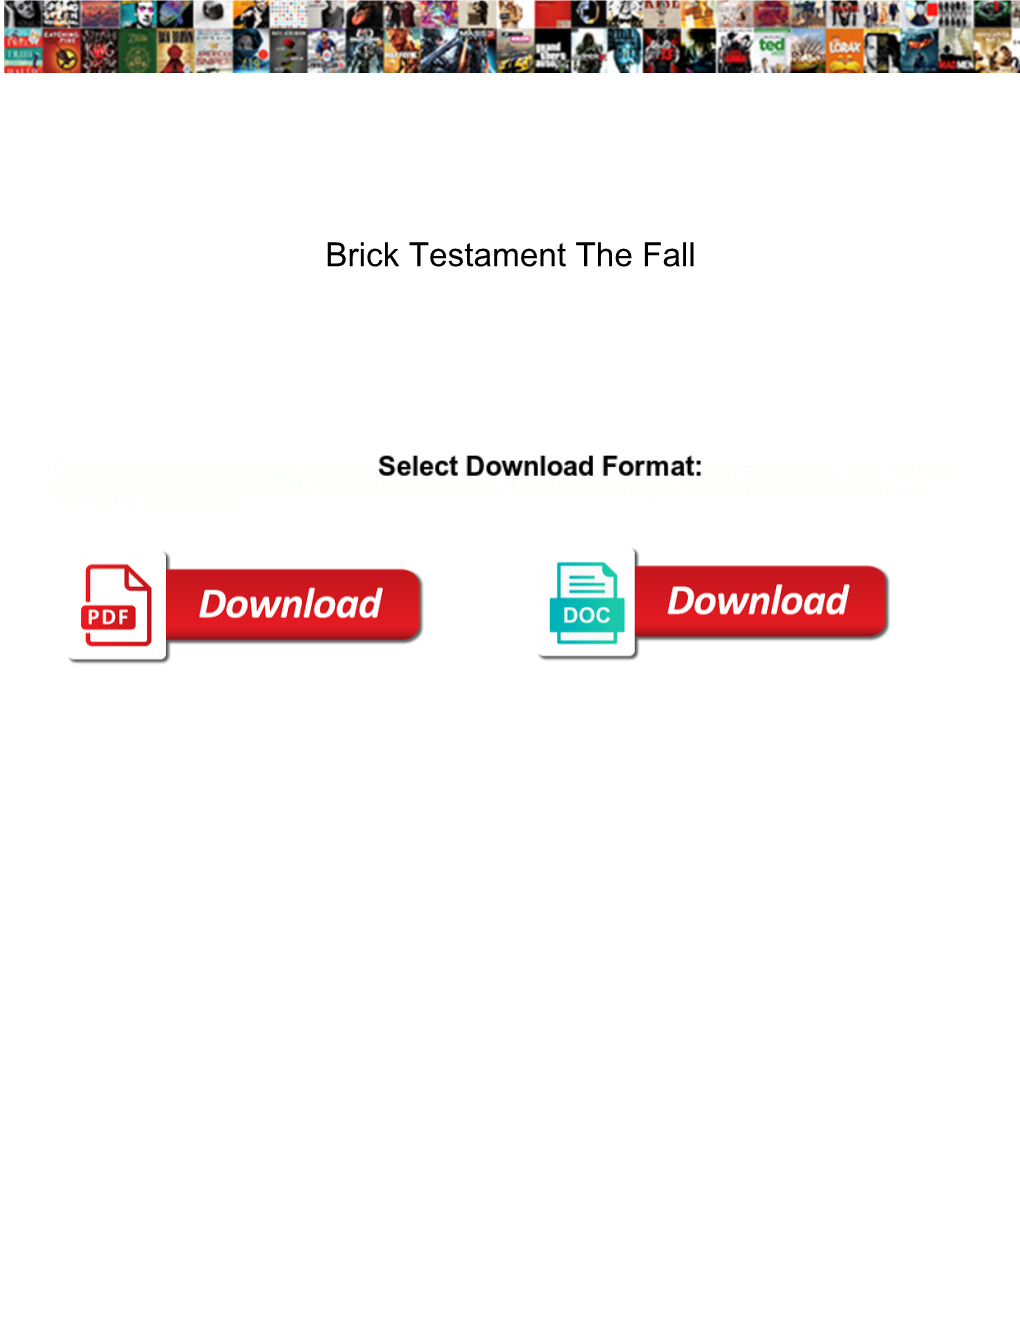 Brick Testament the Fall